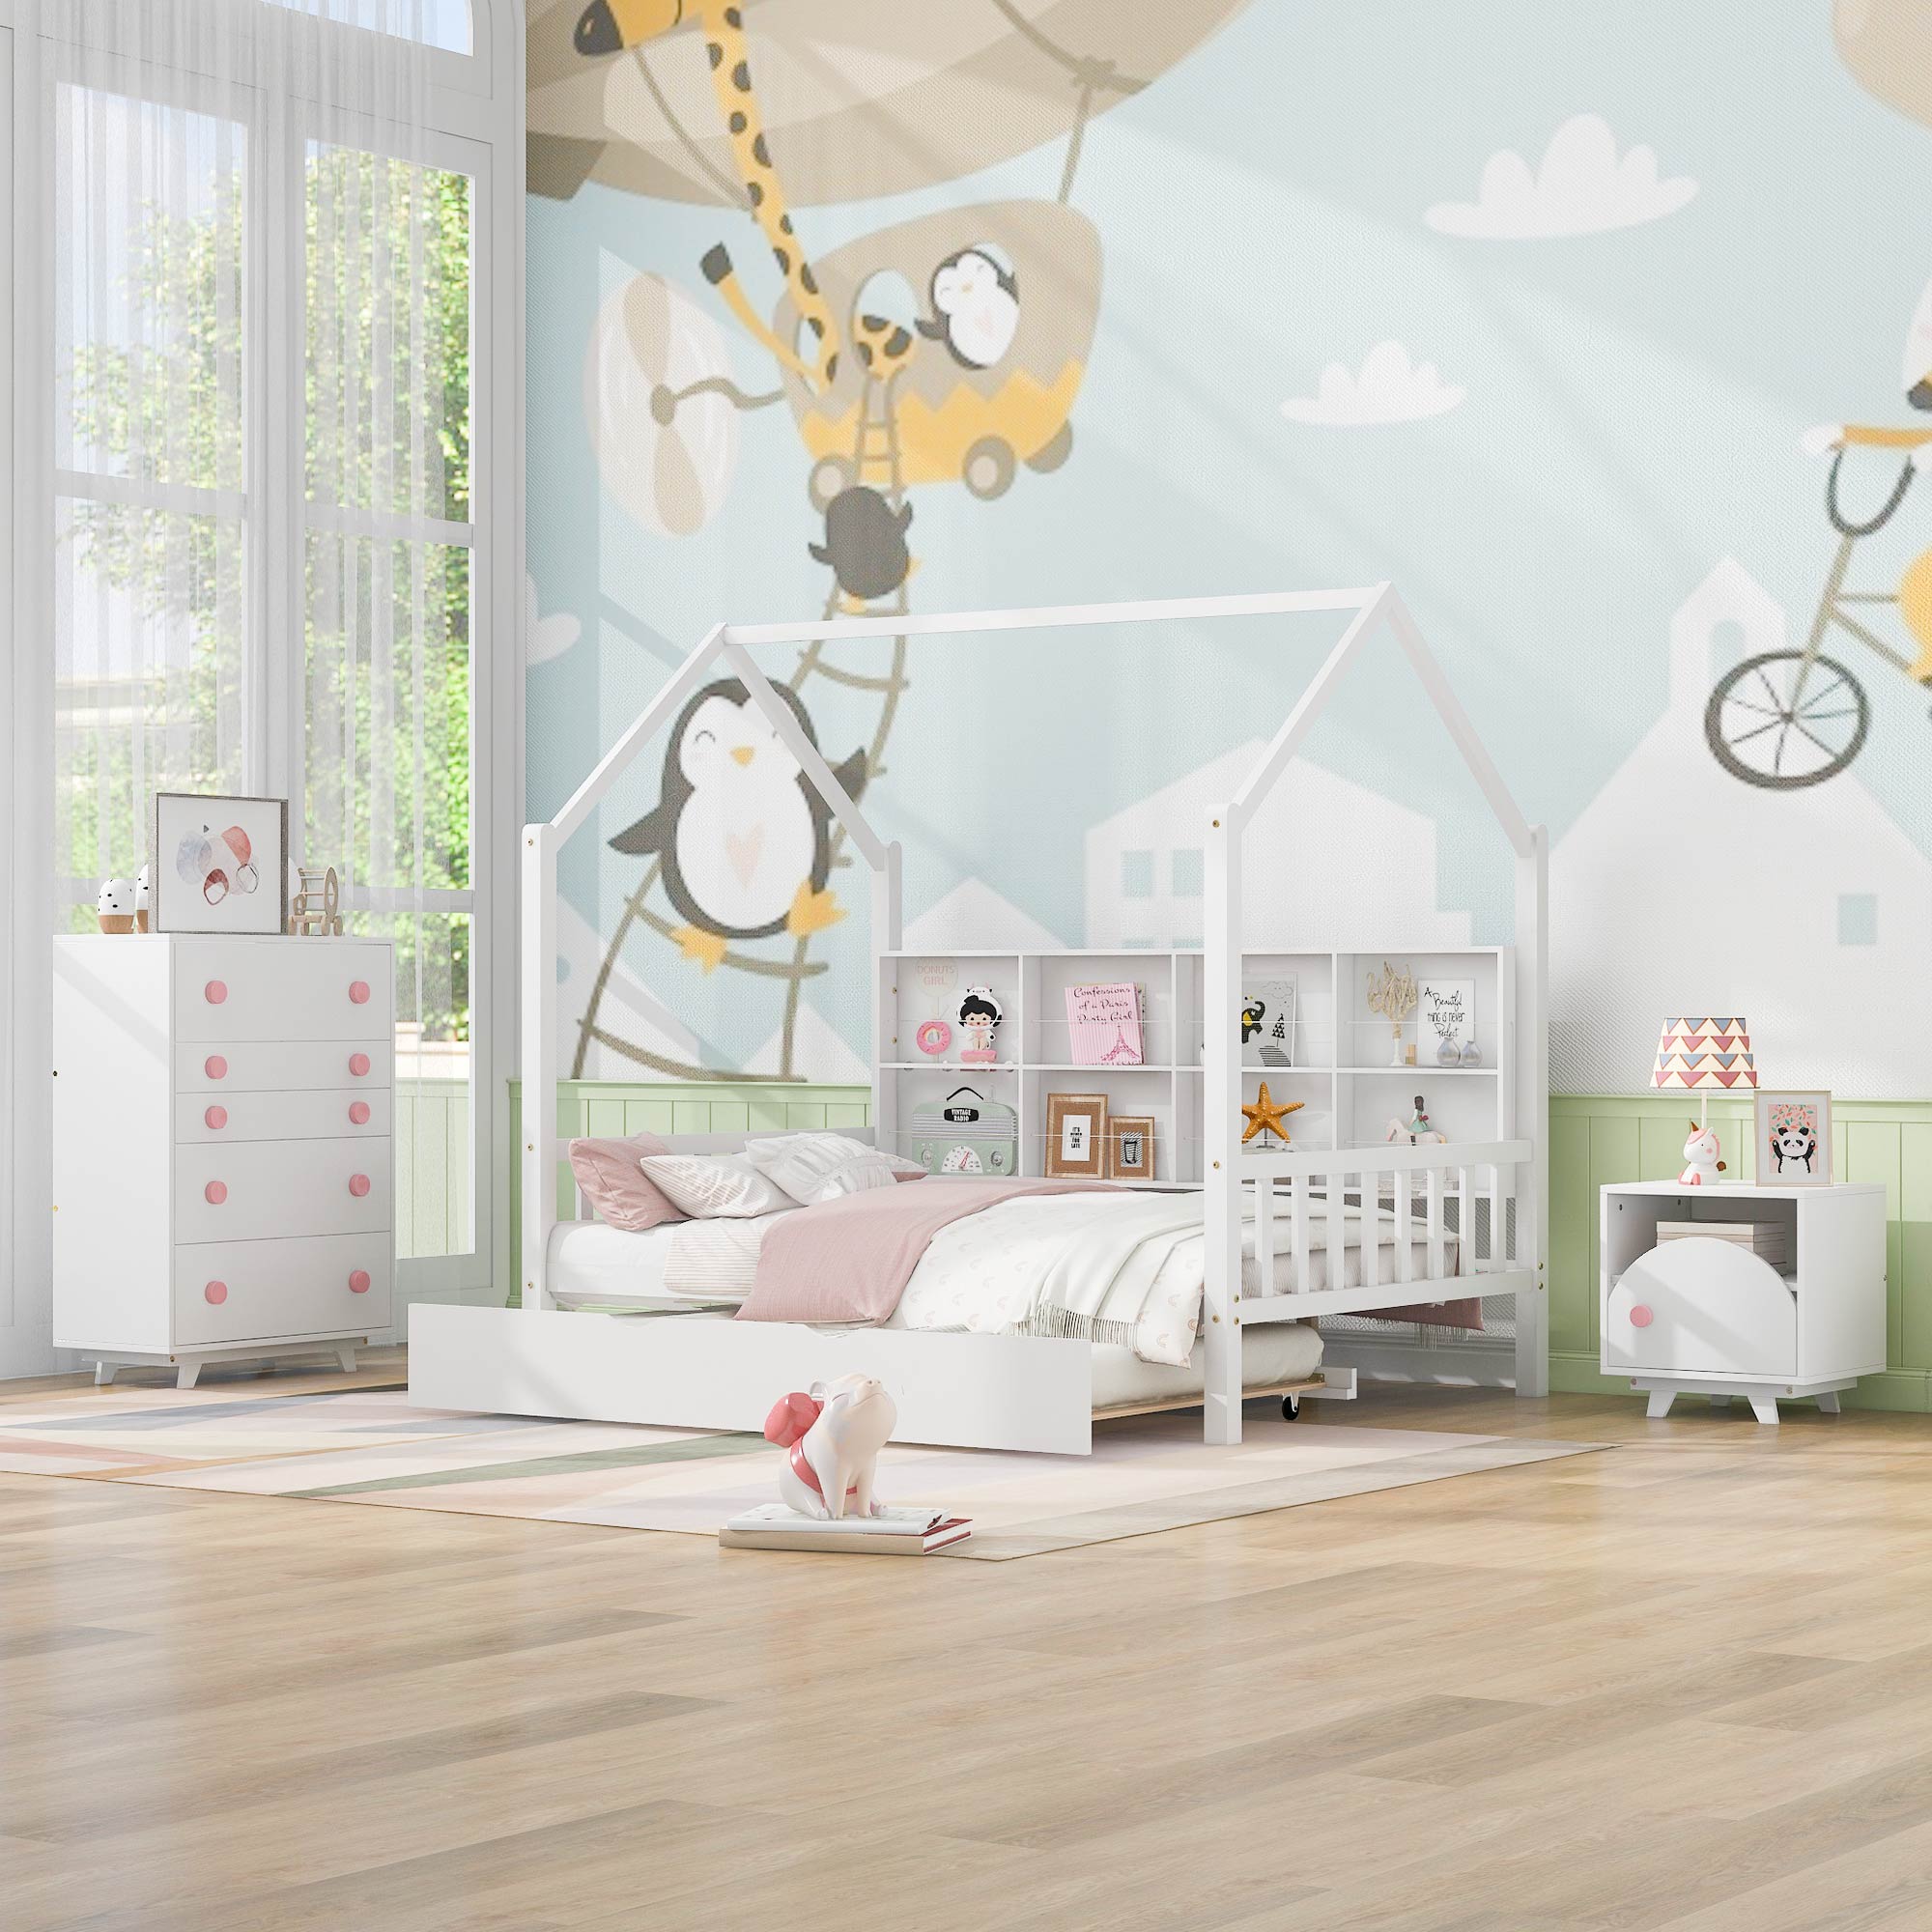 3-Pieces Bedroom Sets For Kids, Full House Bed - HL000015AAK